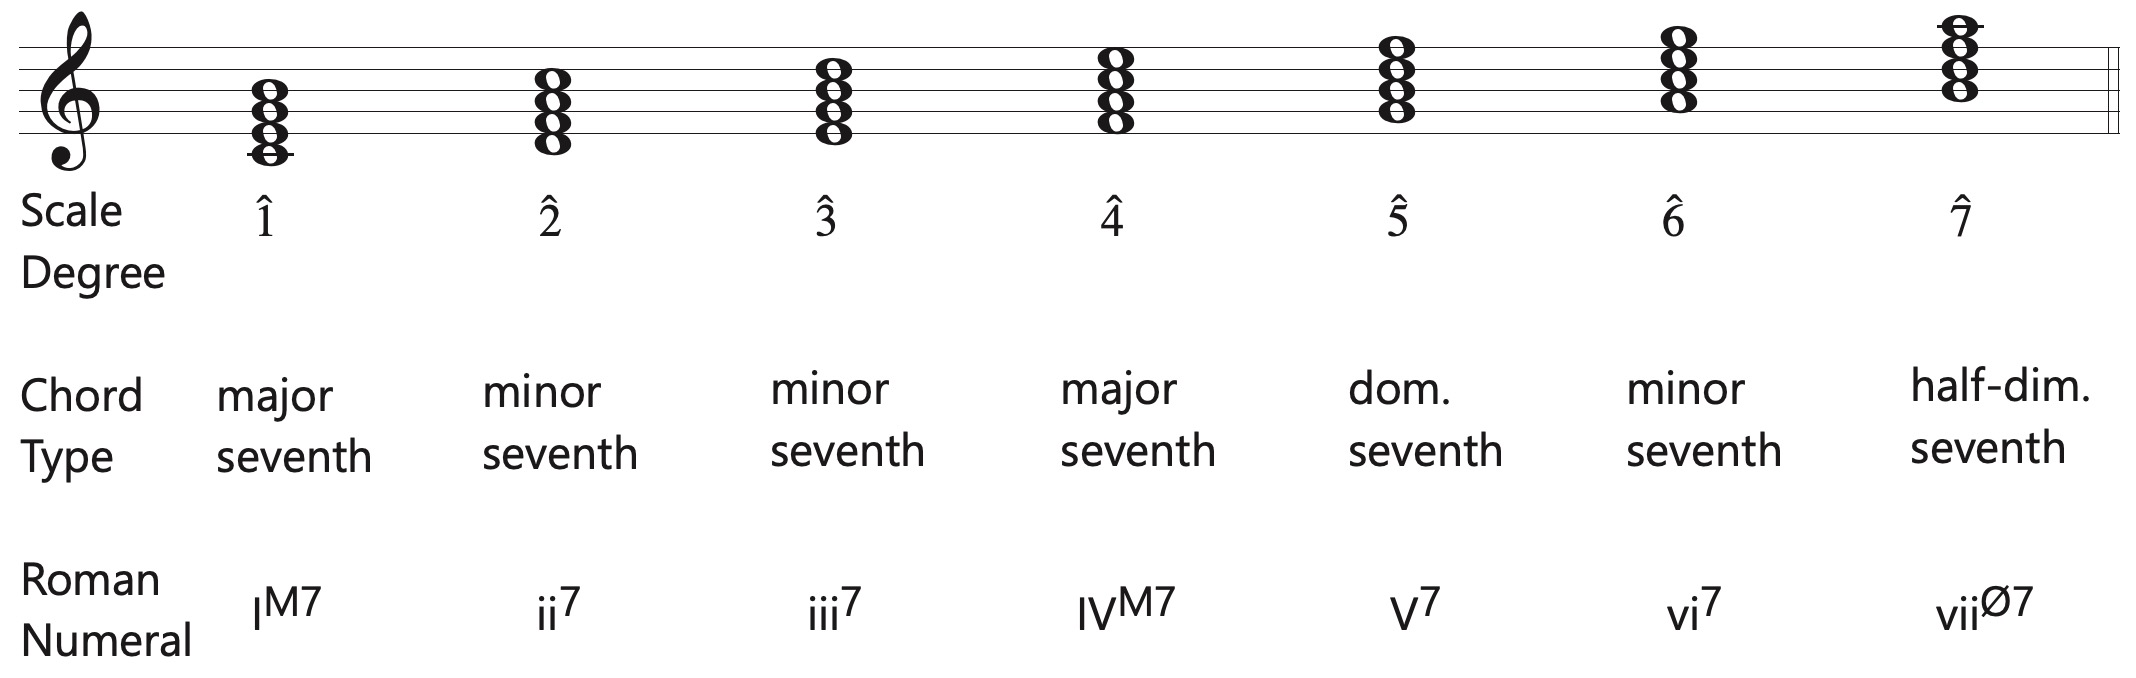 diatonic seventh chords in major